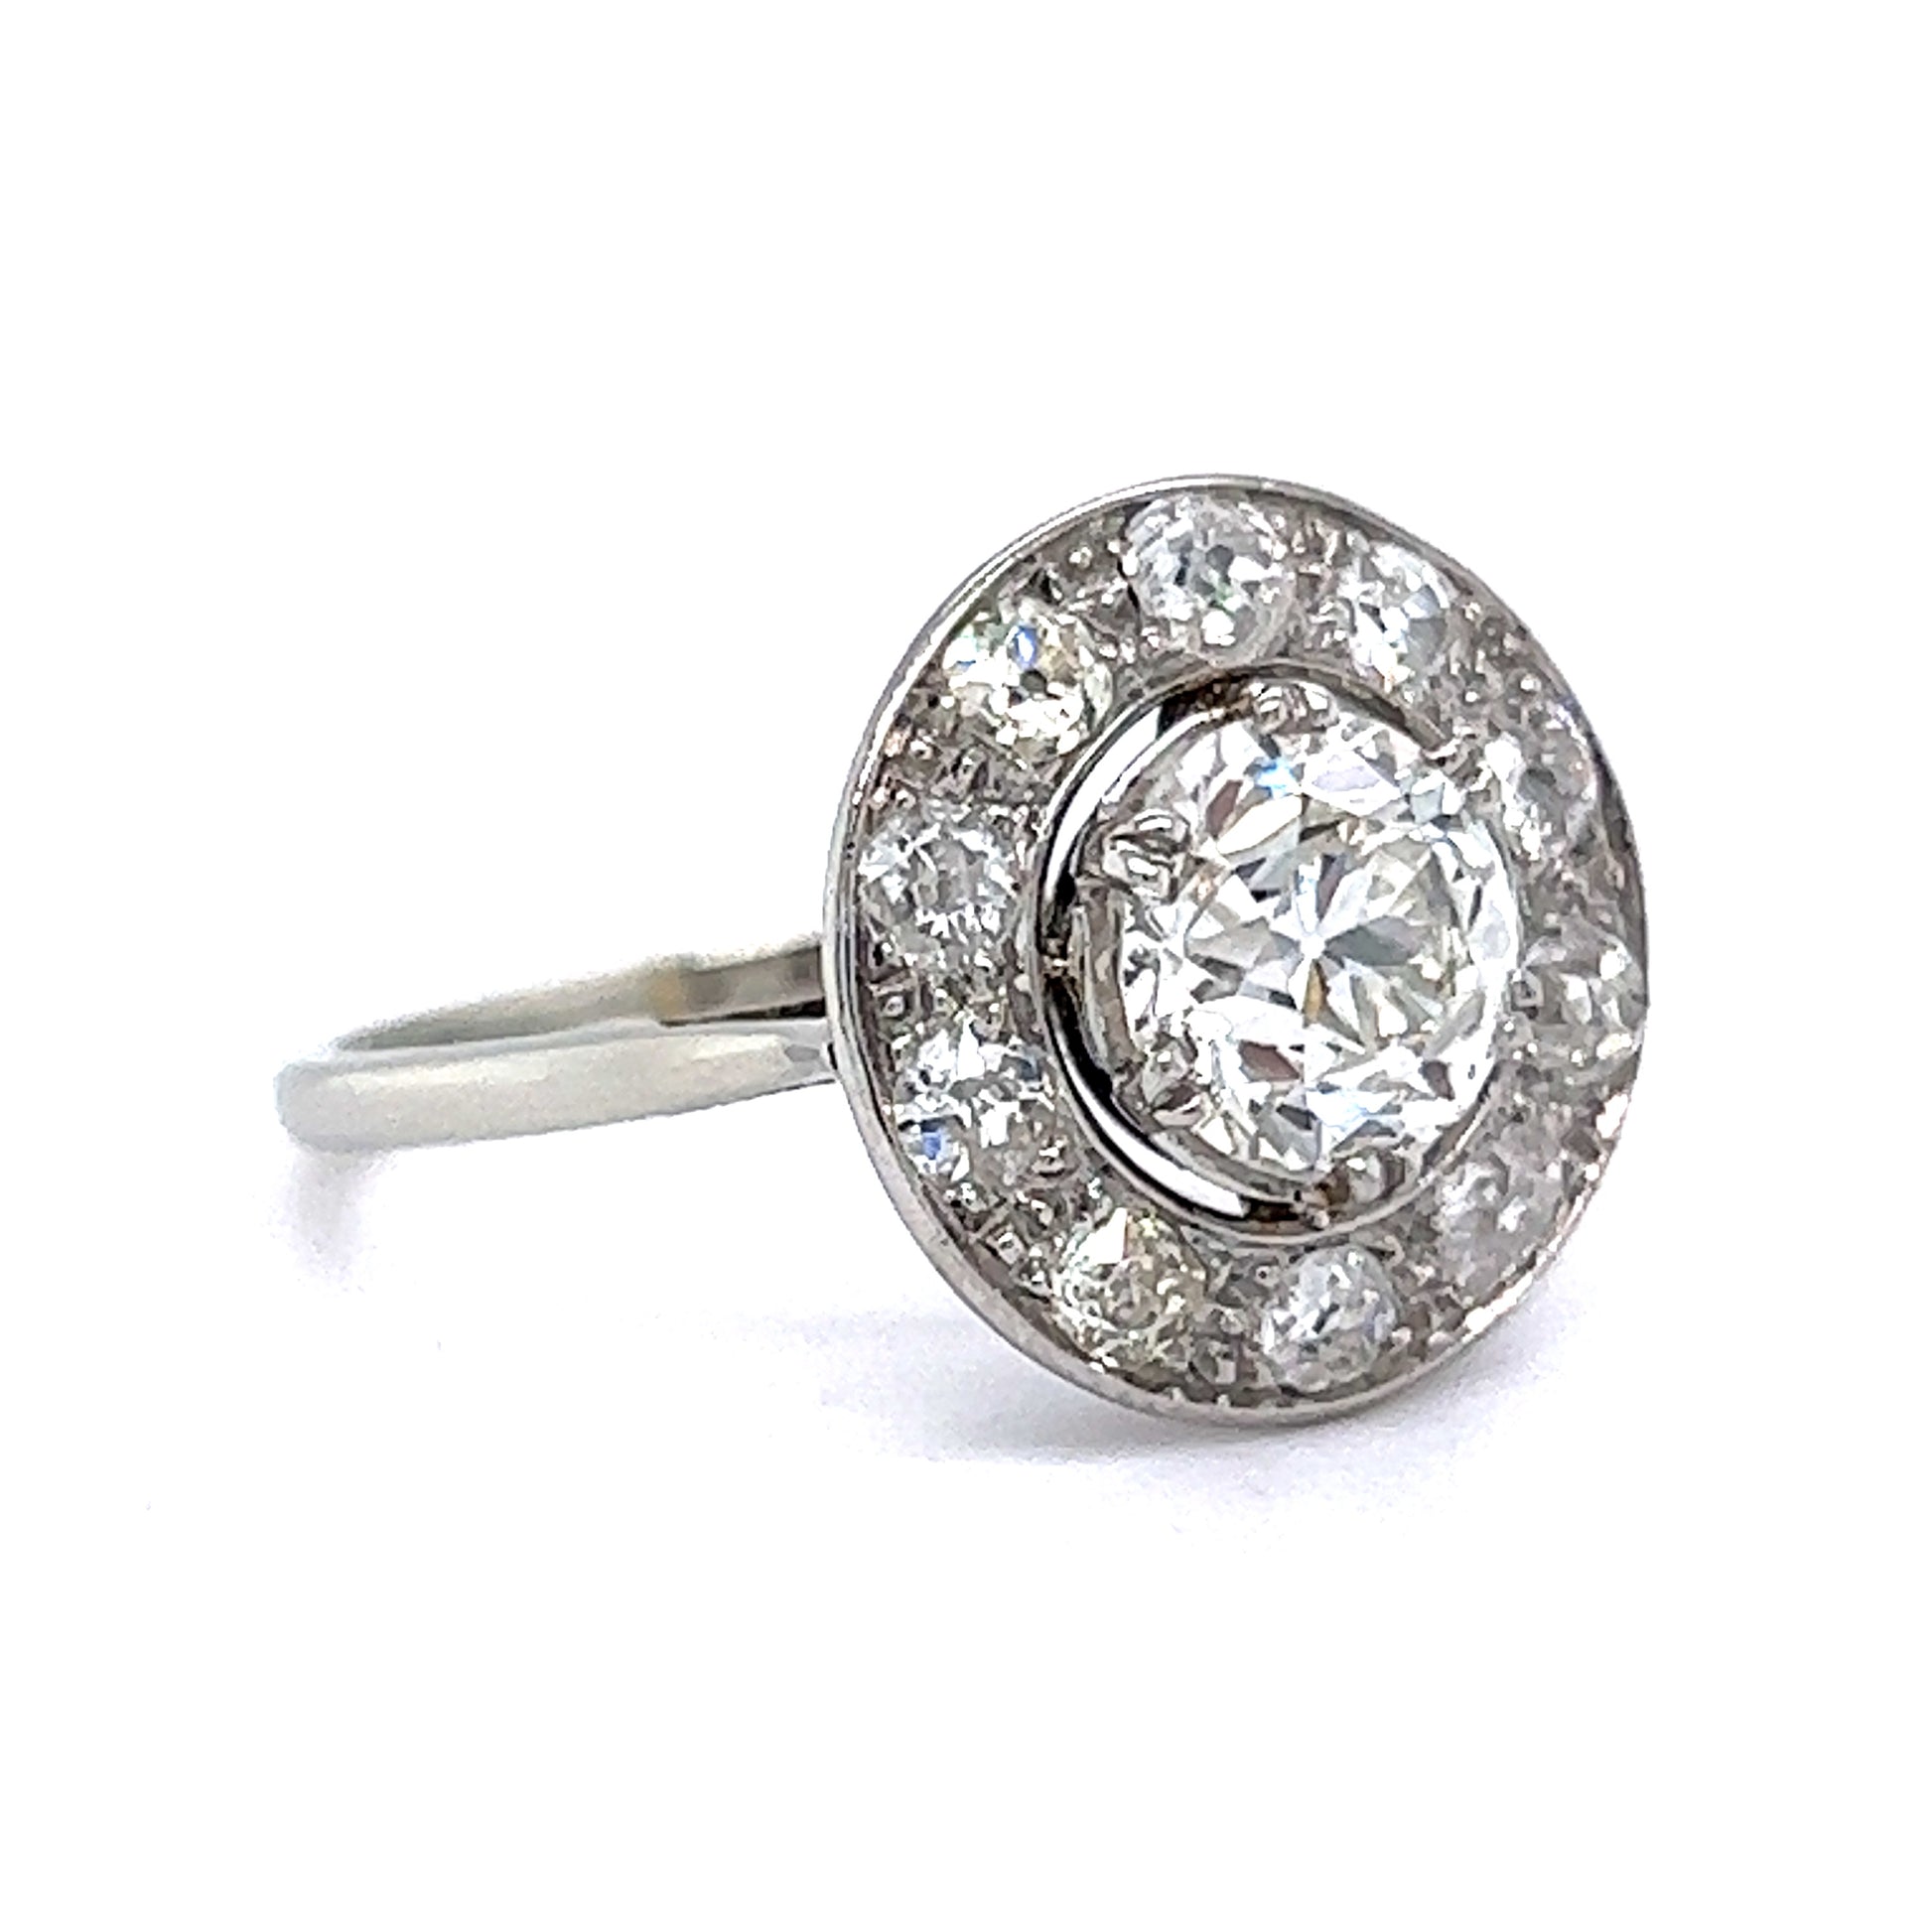 1.51 Old European Diamond Halo Ring in Platinum & White GoldComposition: 18 Karat White Gold/PlatinumRing Size: 8.0Total Diamond Weight: 2.31 ctTotal Gram Weight: 4.1 g